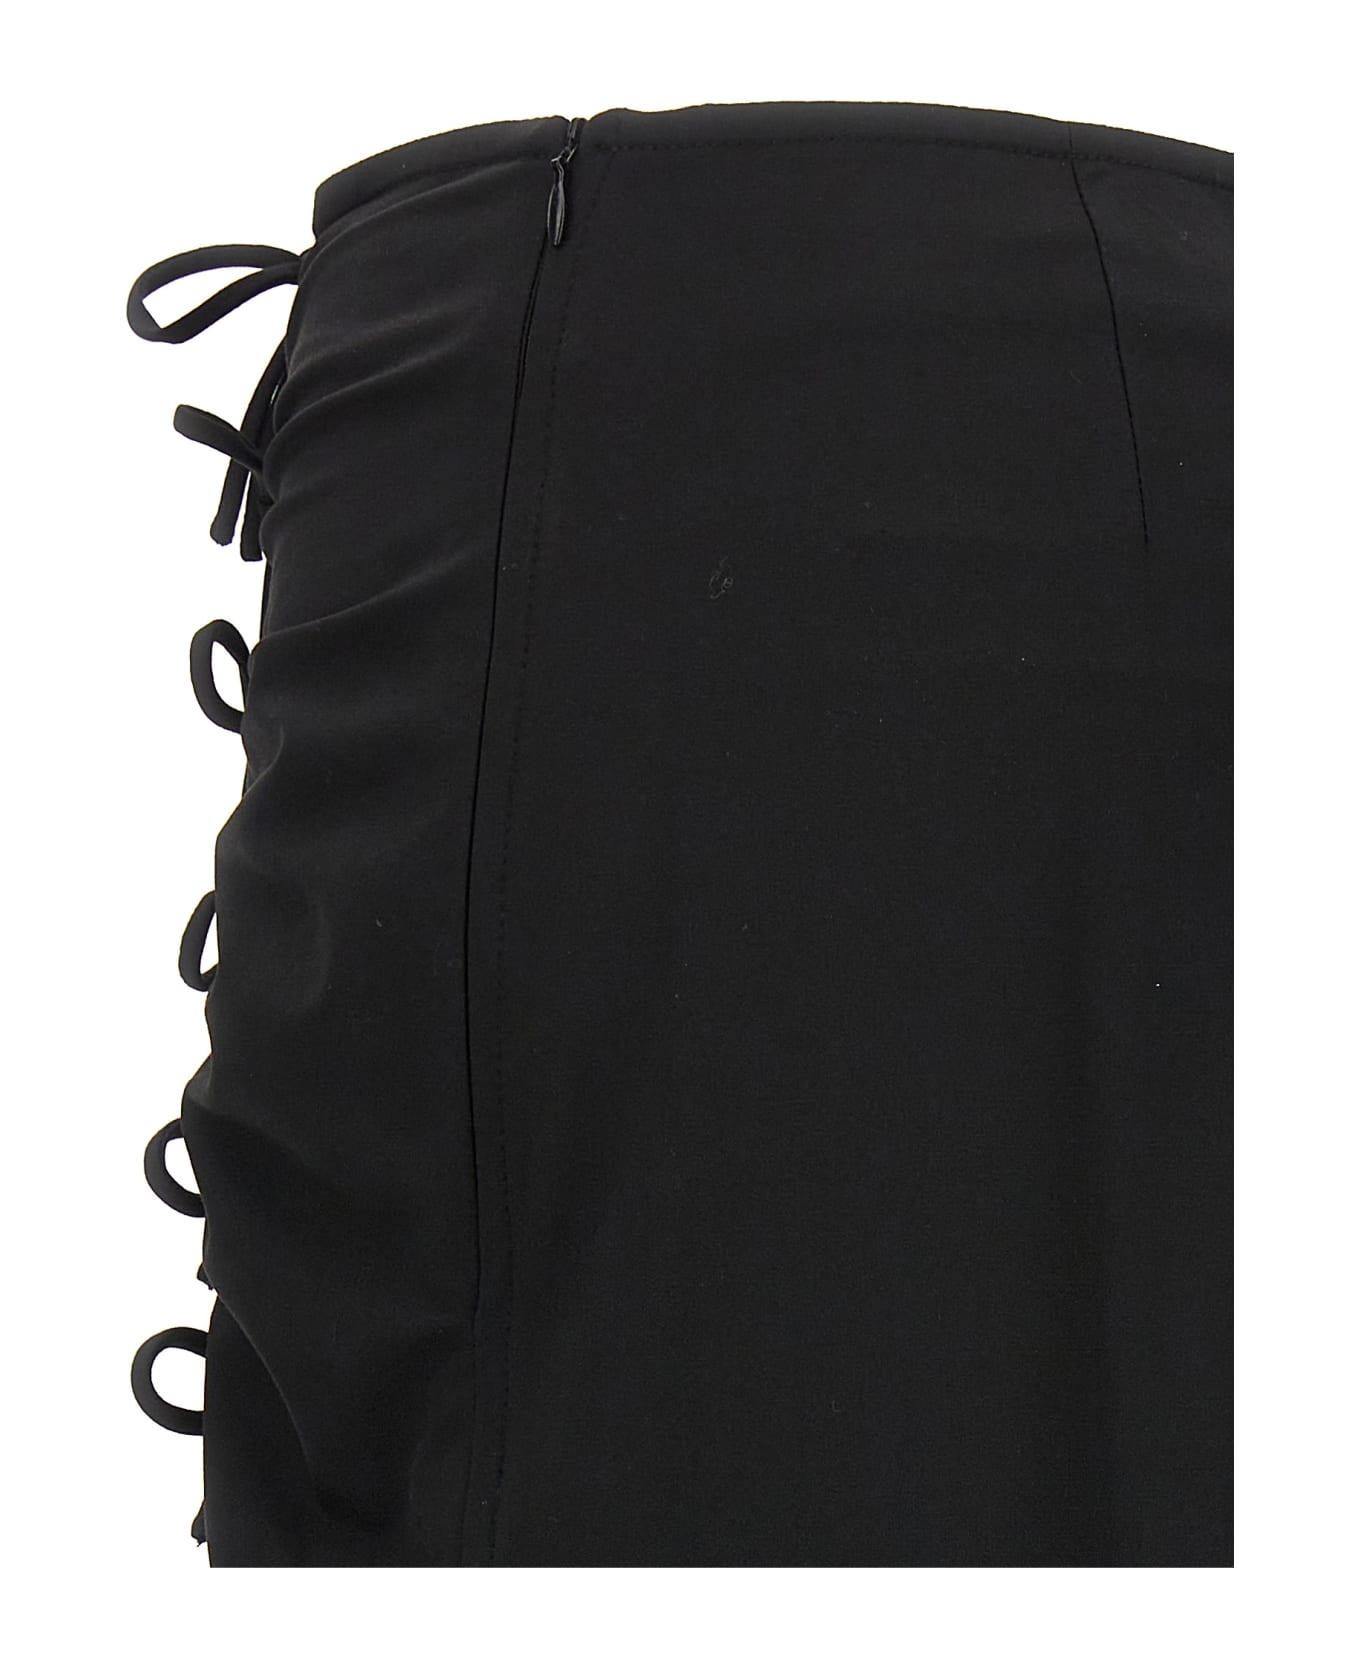 Ganni Midi Bow Skirt - Black スカート